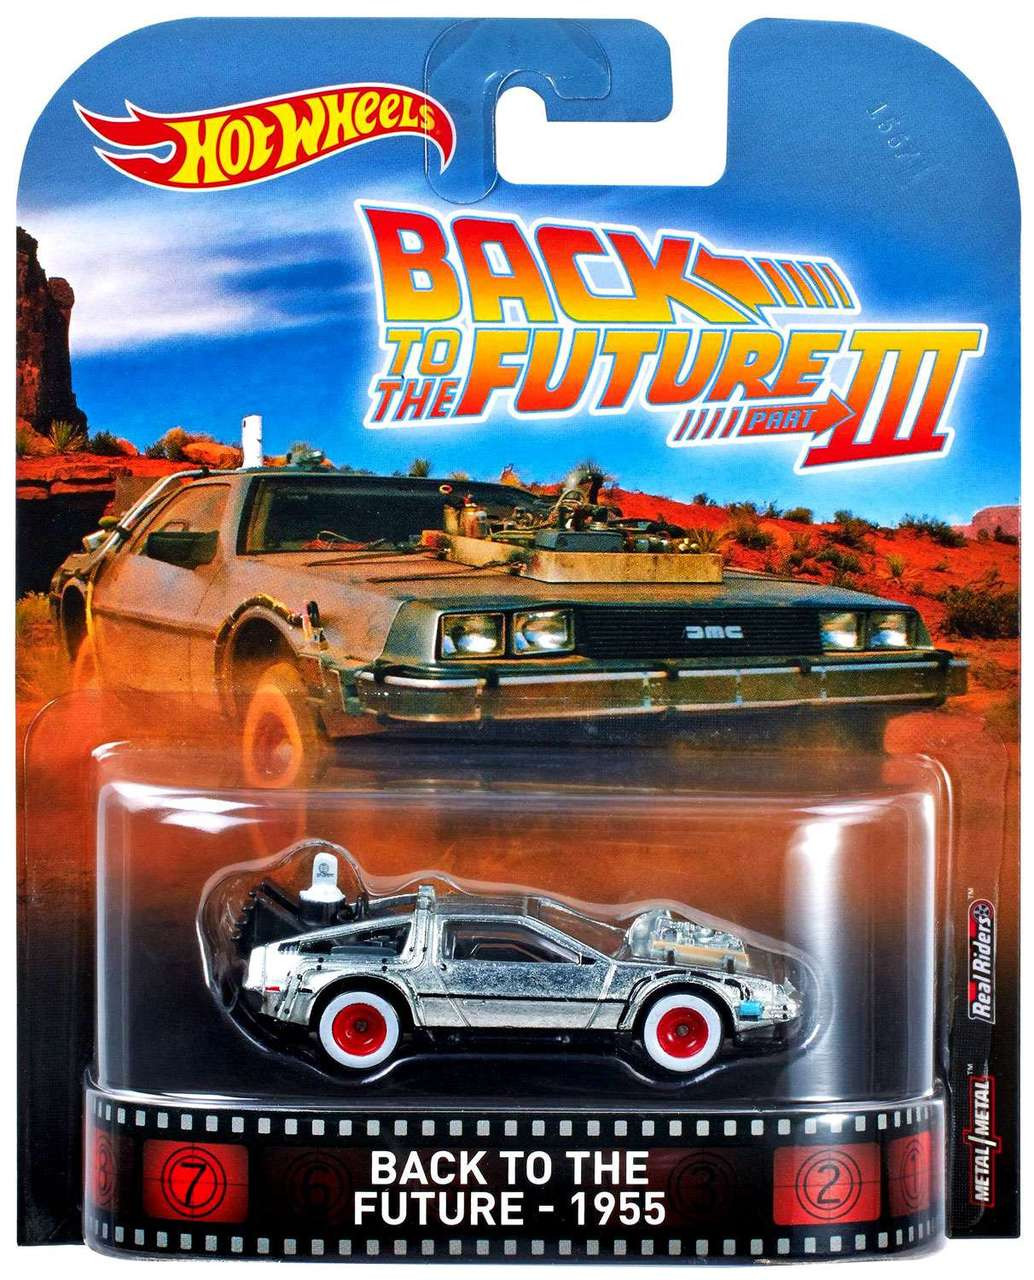 Hot Wheels Back To The Future Part Iii Hw Retro Entertainment Delorean Time Machine 1955 164 Diecast Car Mattel Toys Toywiz - back to the futurepart gear roblox news